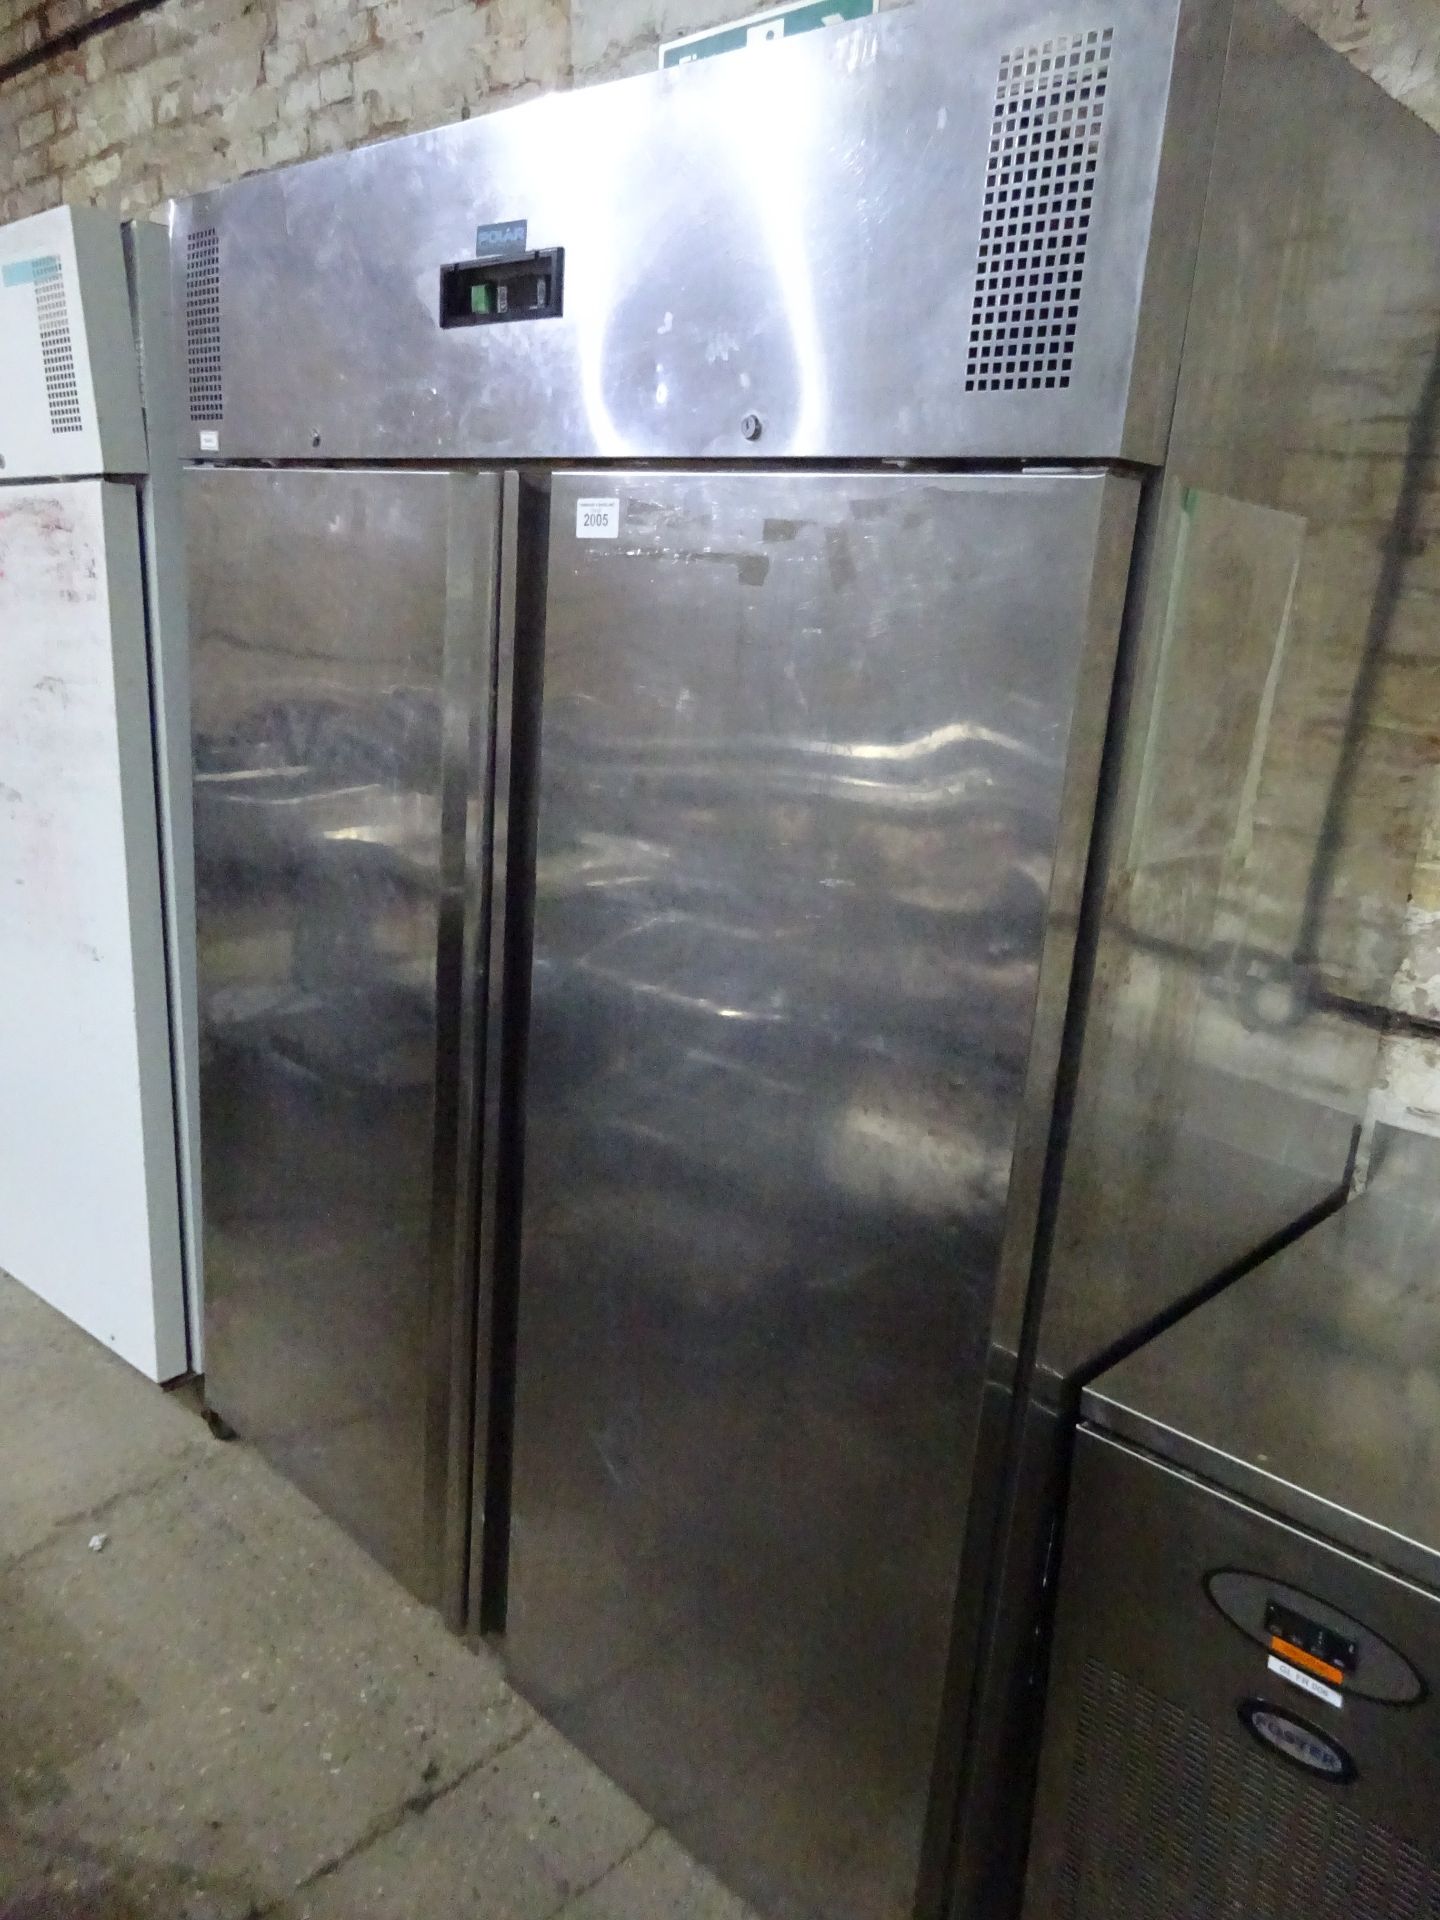 Polar U634-B twin door fridge, 146cms.